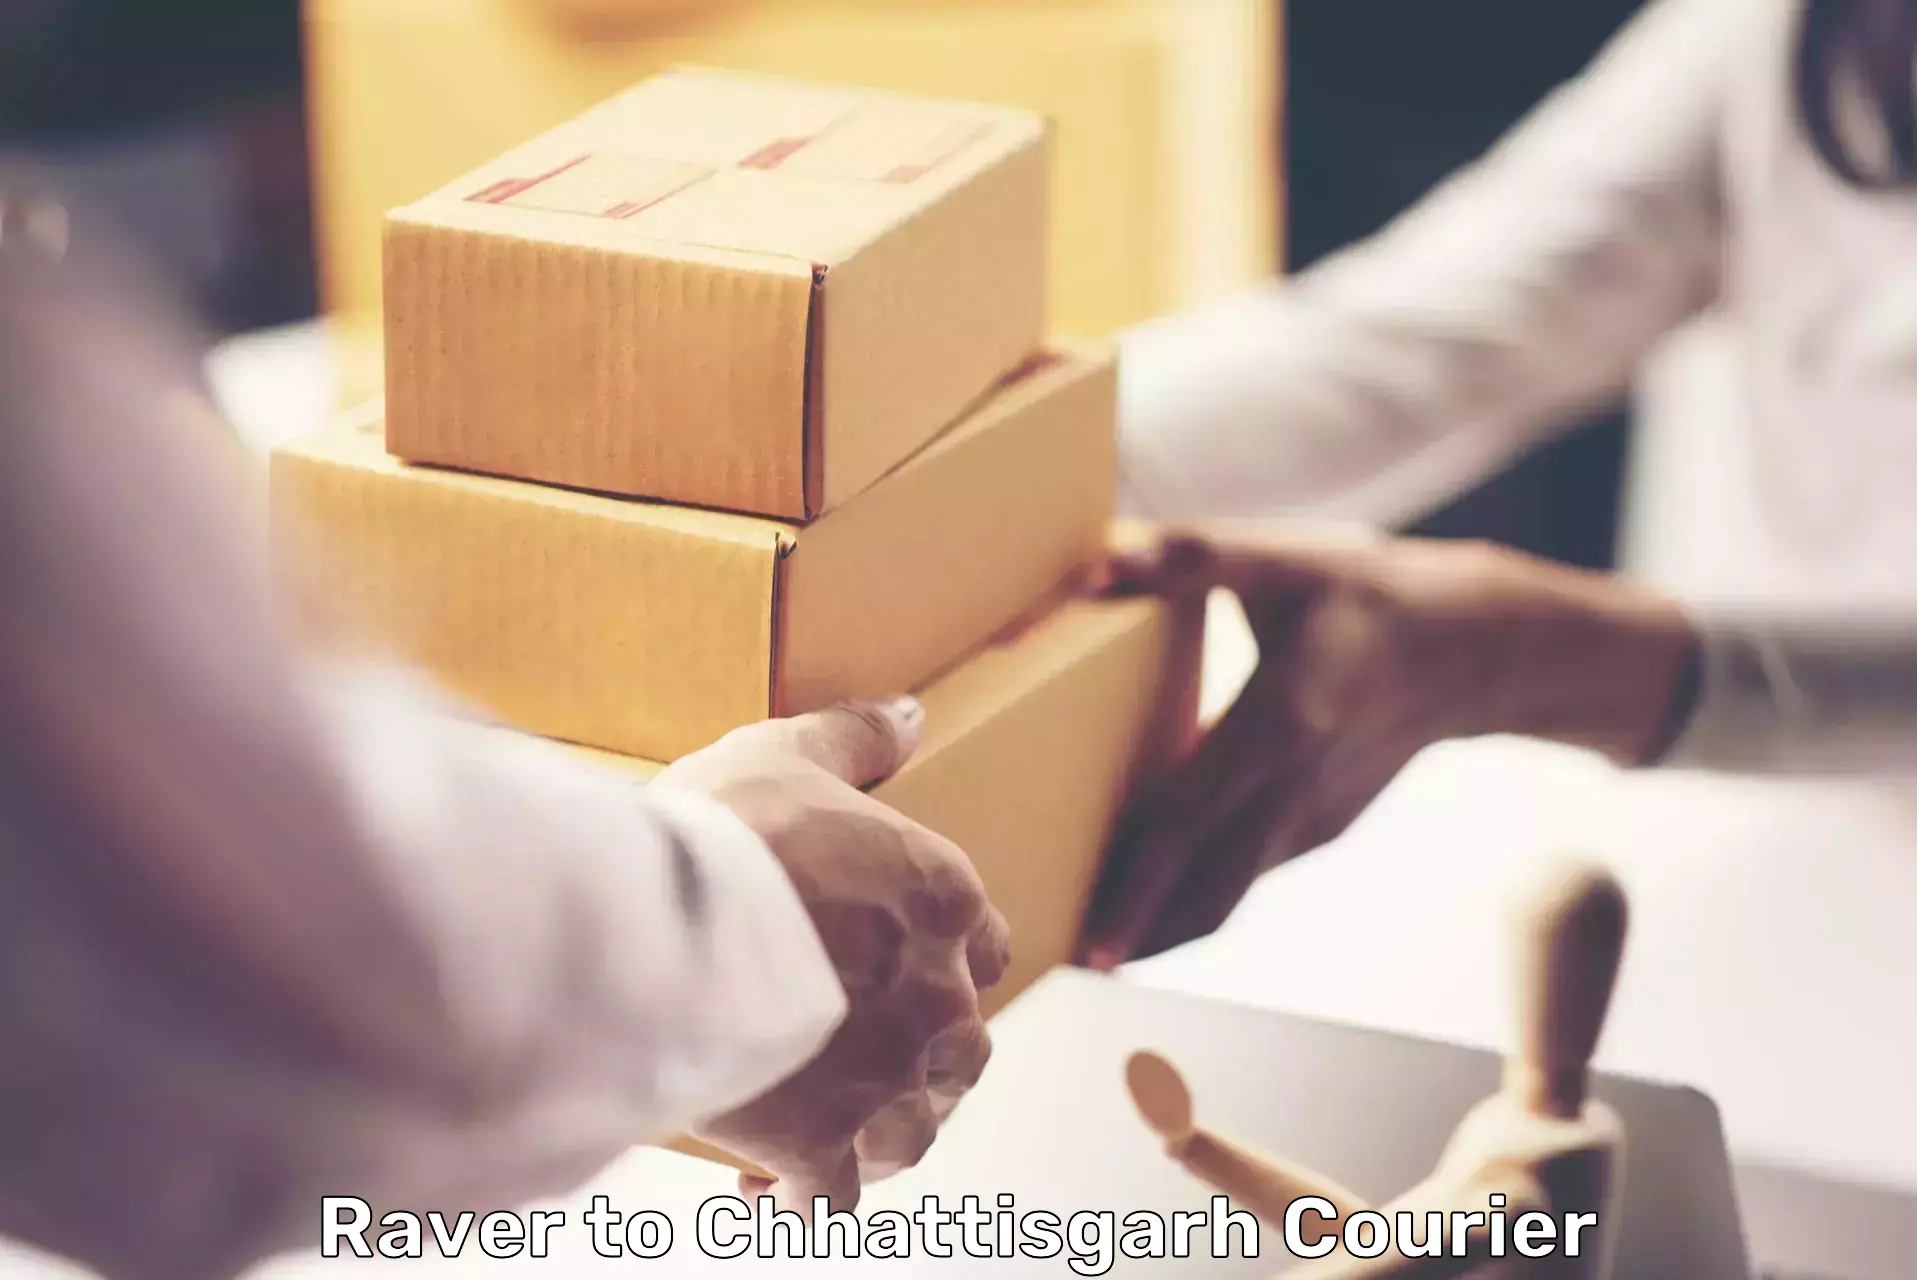 Package delivery network Raver to Korea Chhattisgarh